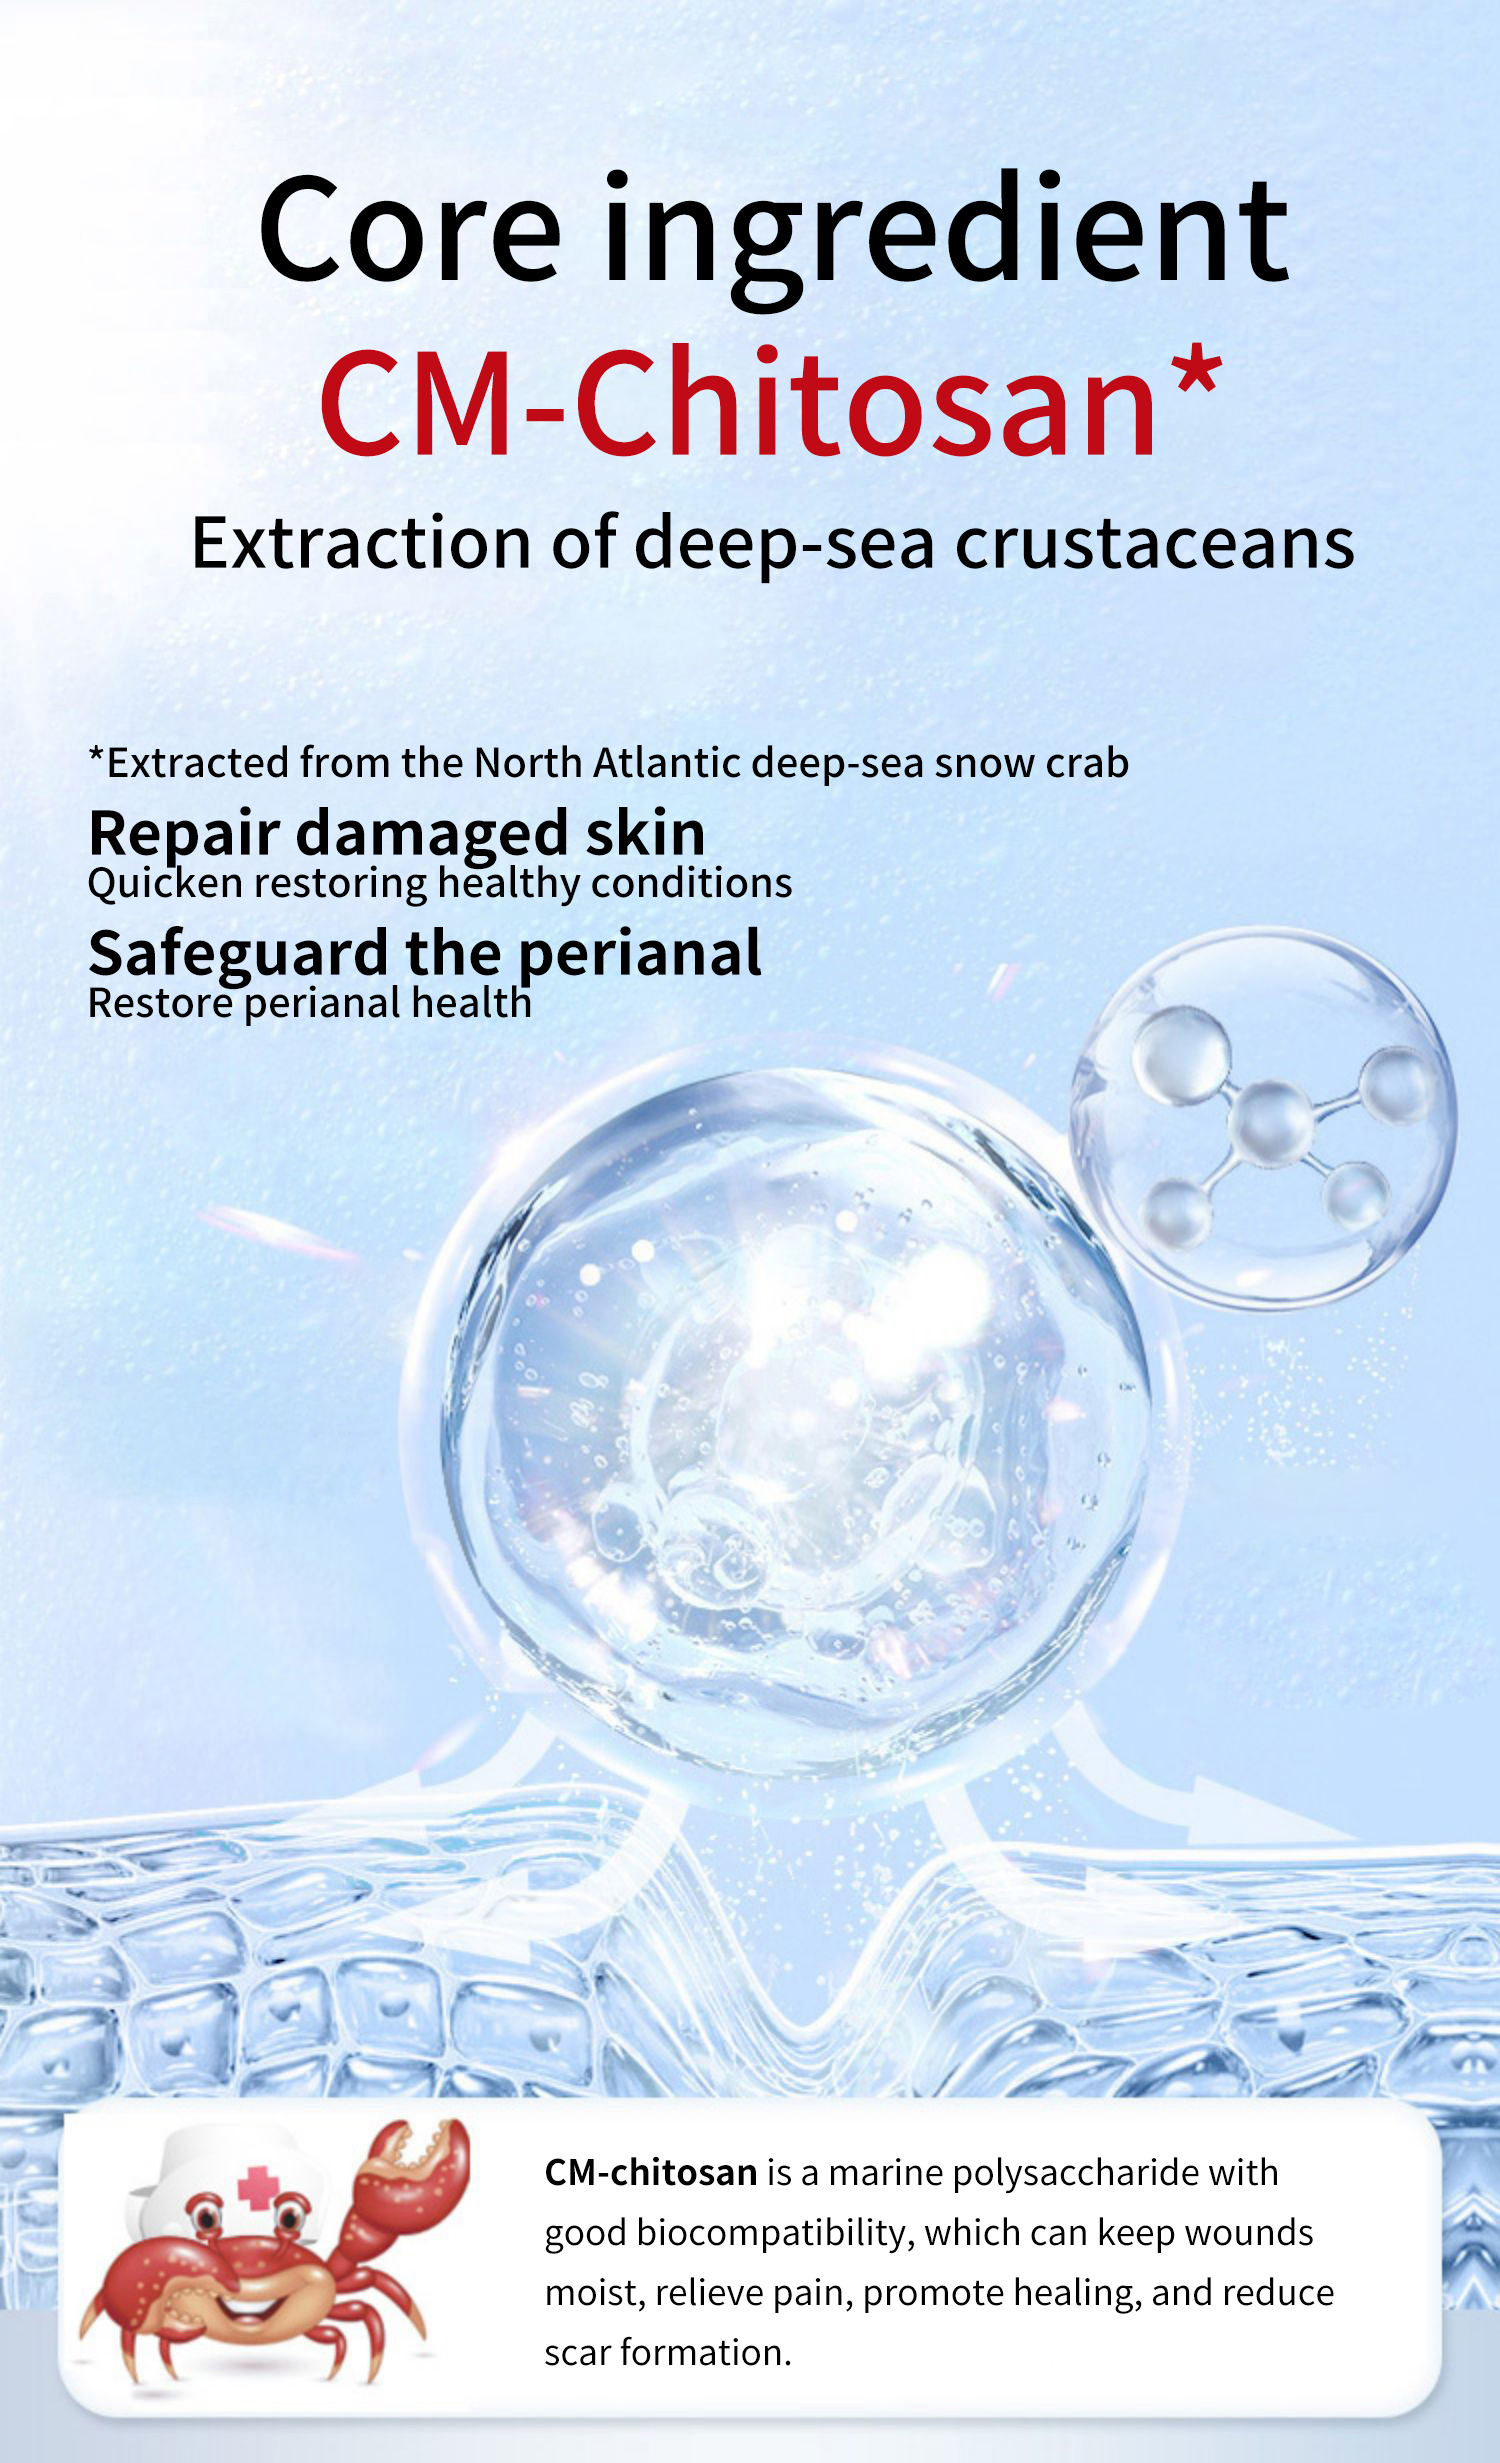 CM-Chitosan, repair damaged skin, safeguard the perianal, crab nurse, water bubble